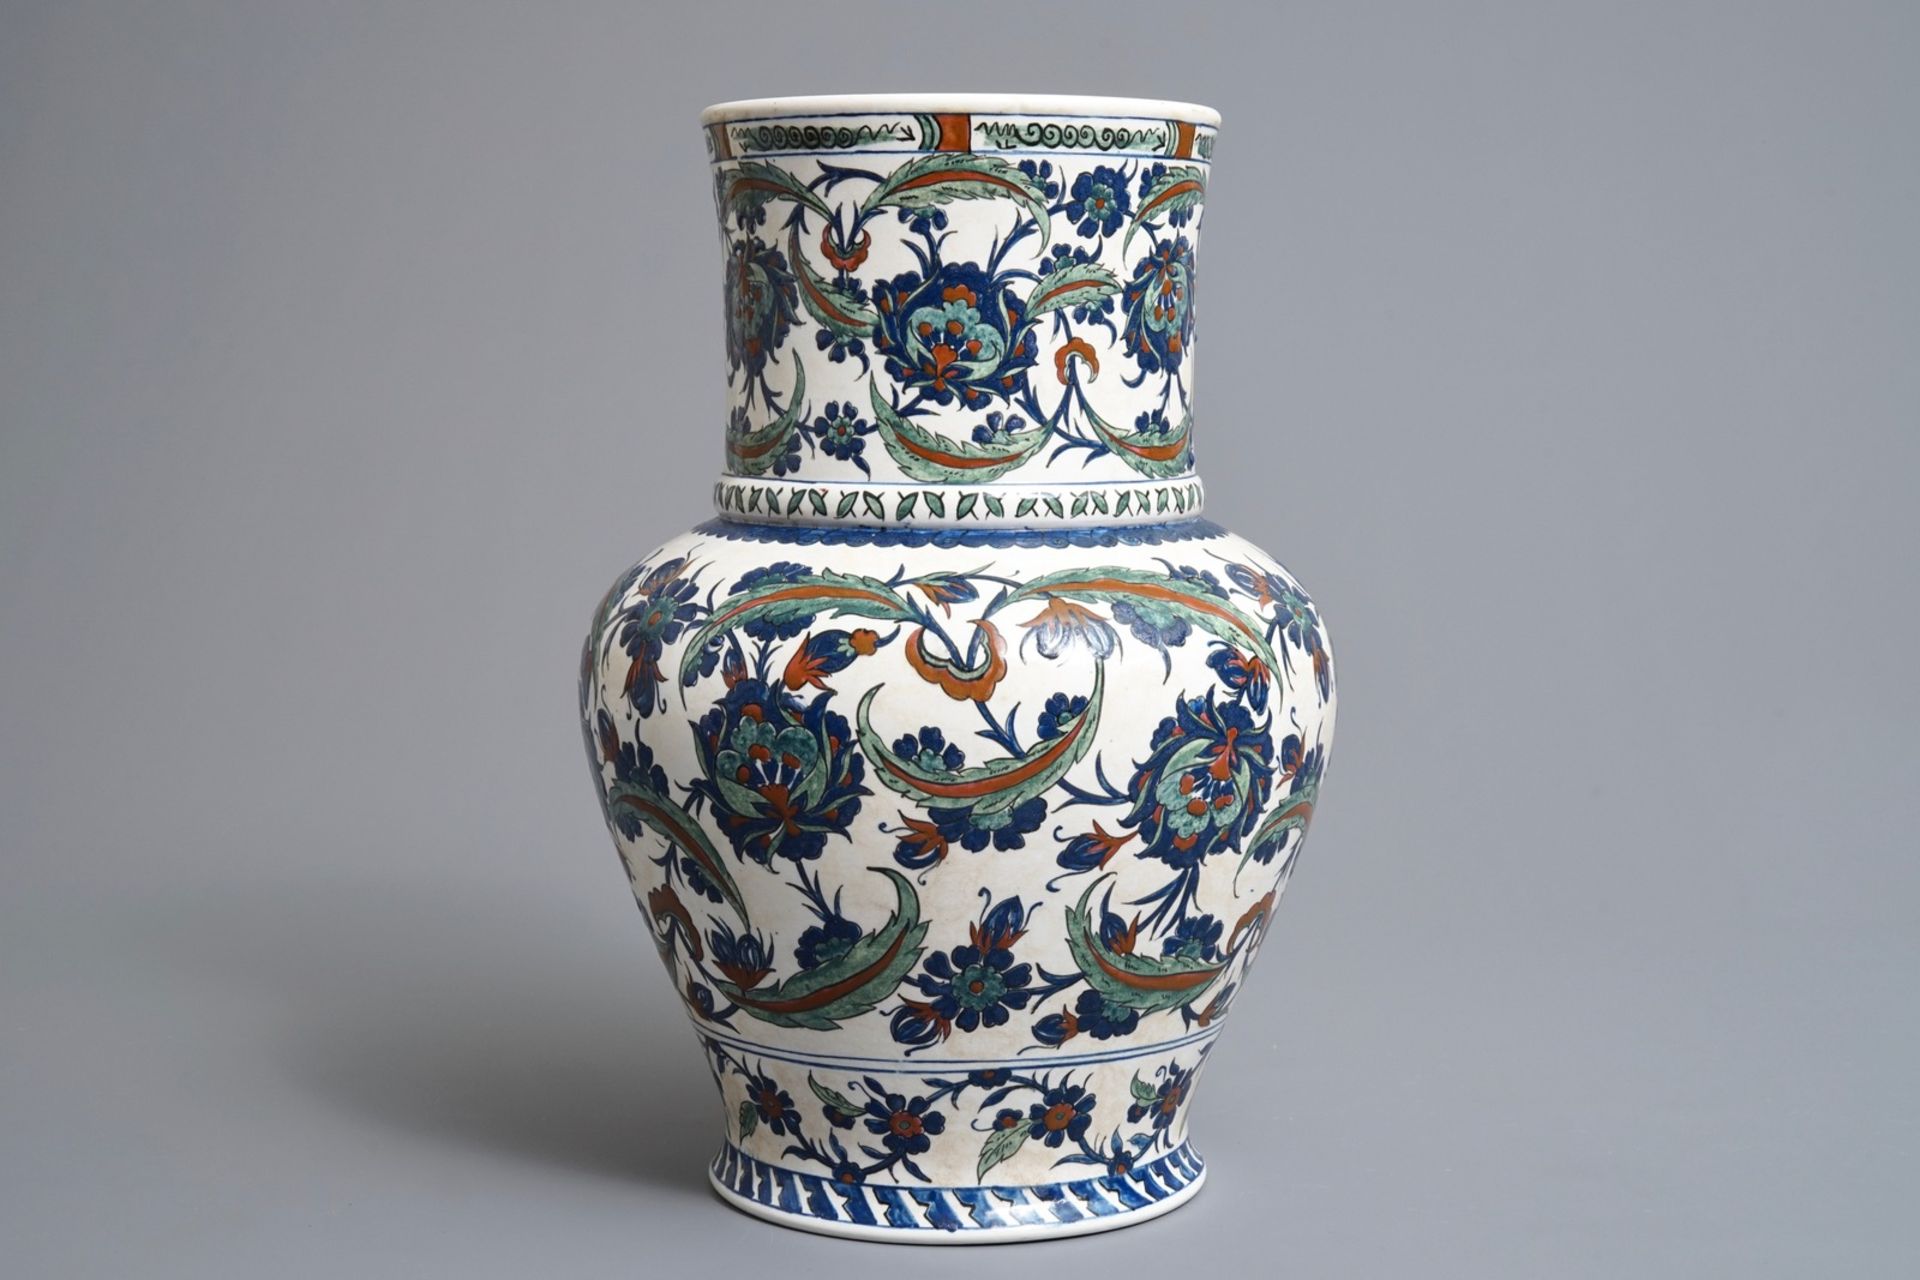 An Iznik-style vase with floral design, Samson, Paris, 19e eeuw - Image 3 of 6